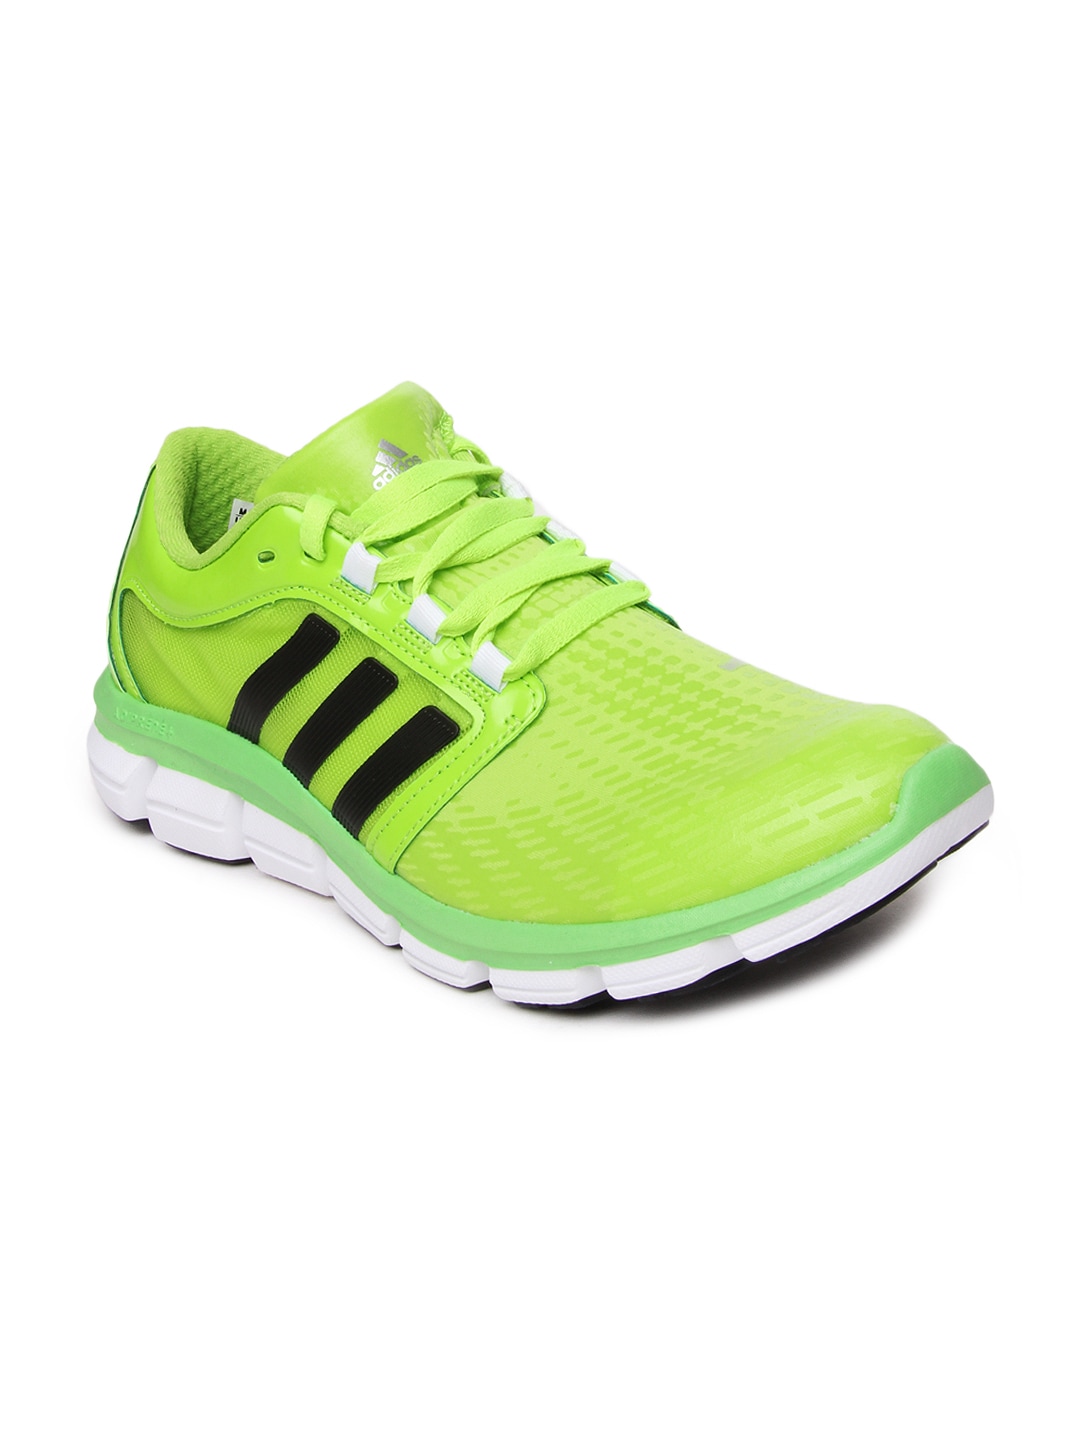 Buy Adidas Men Neon Green Adipure Ride Sports Shoes - 634 - Footwear